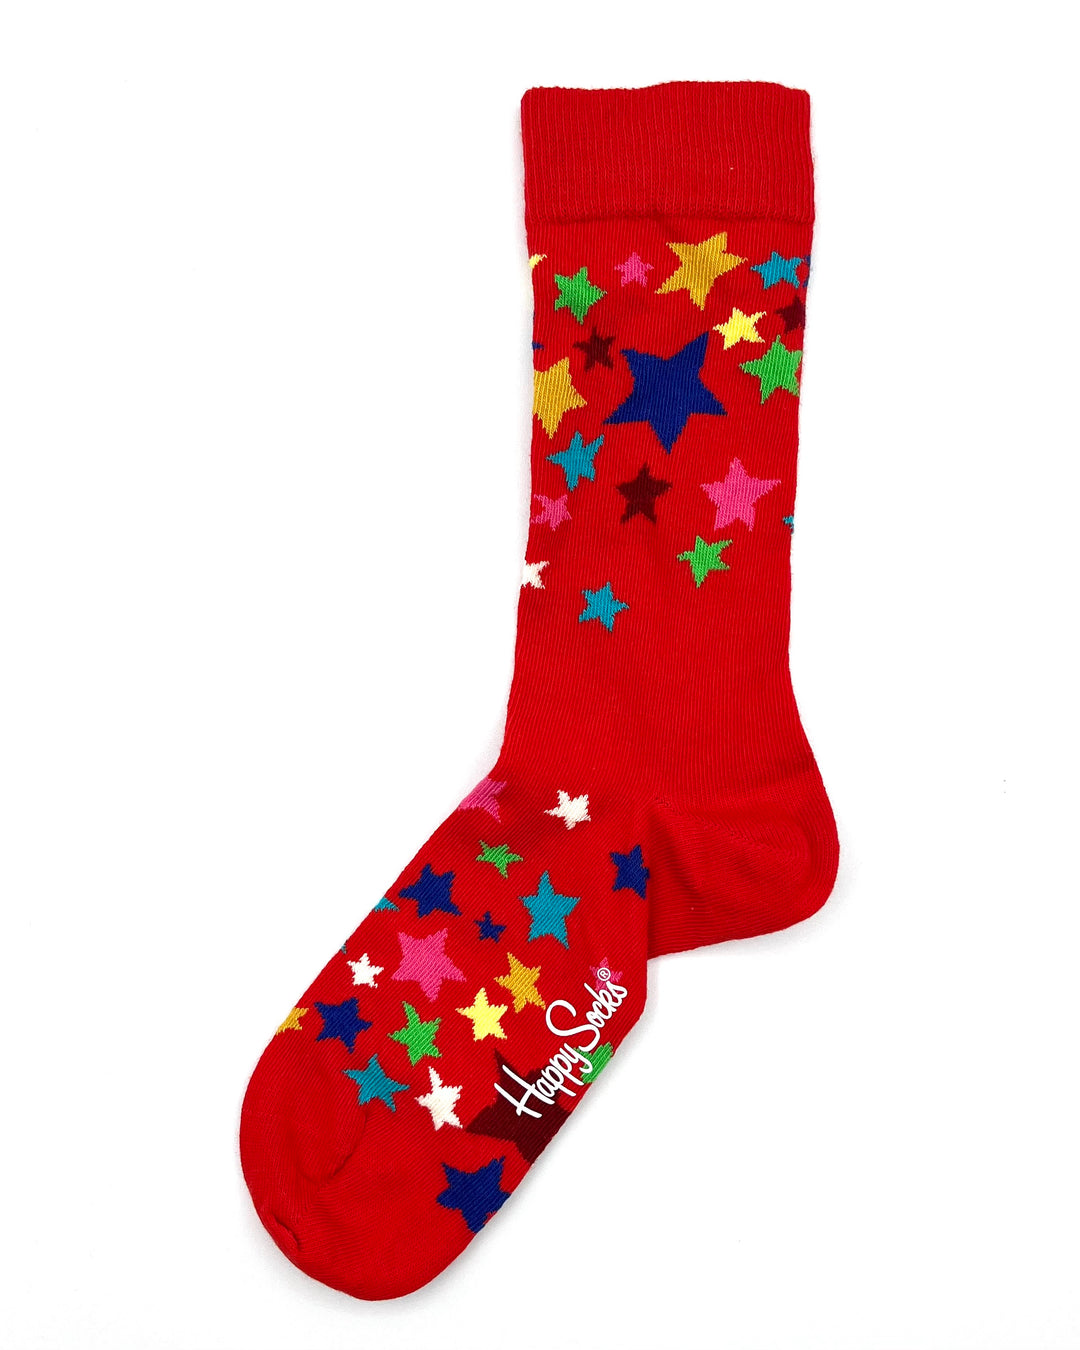 Star Print Socks - Adult And Kid Sizes